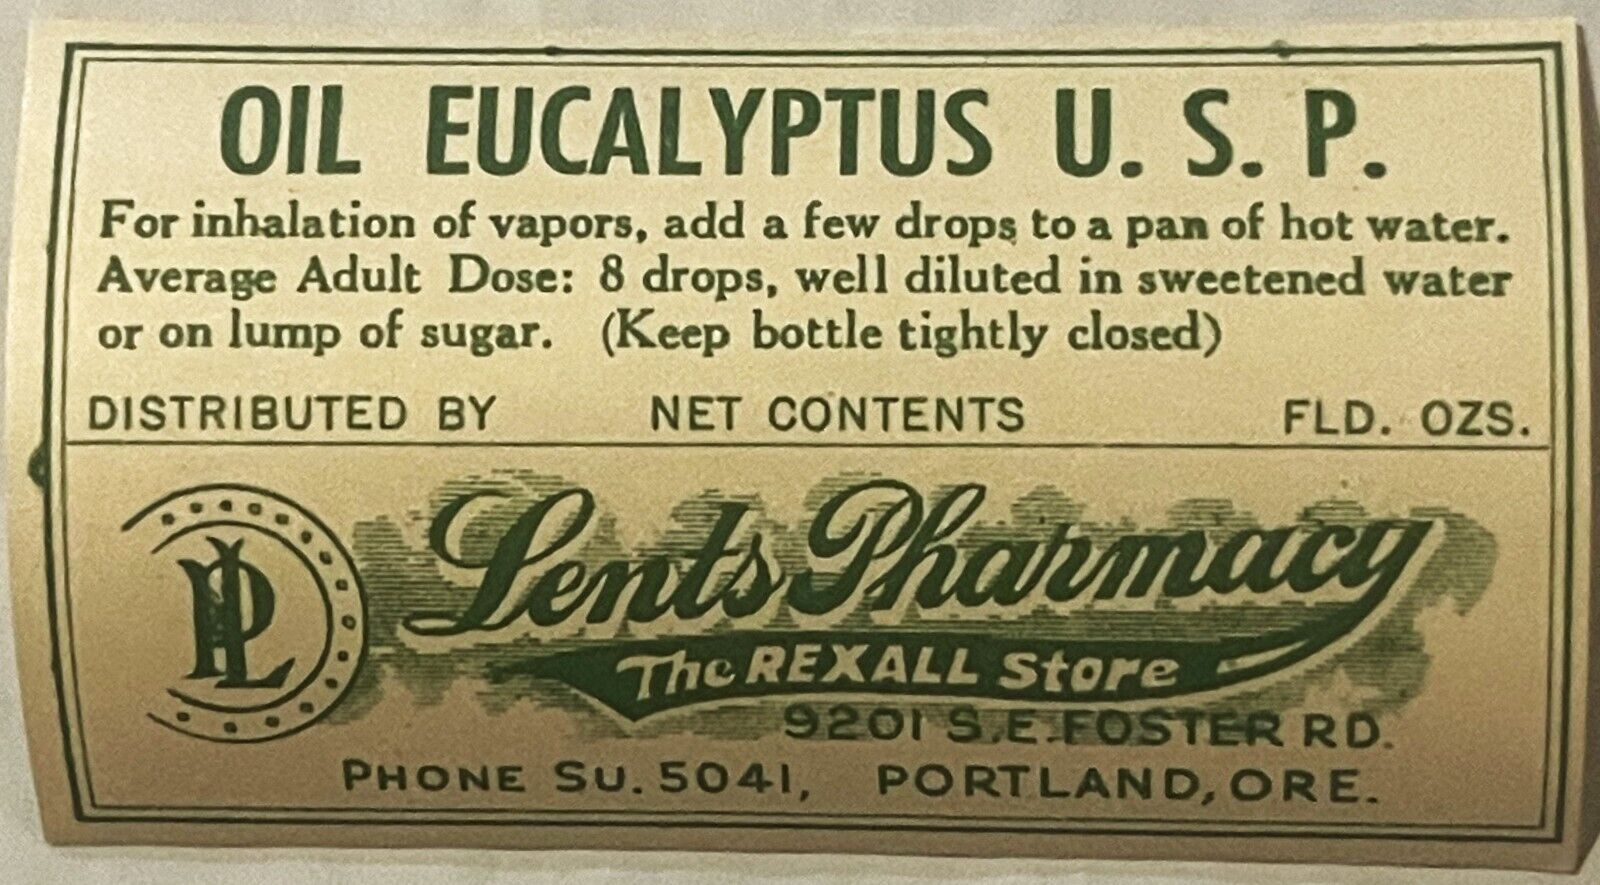 Rare Vintage 1930s Oil Eucalyptus Label, Lents Pharmacy, Portland, OR, Historic